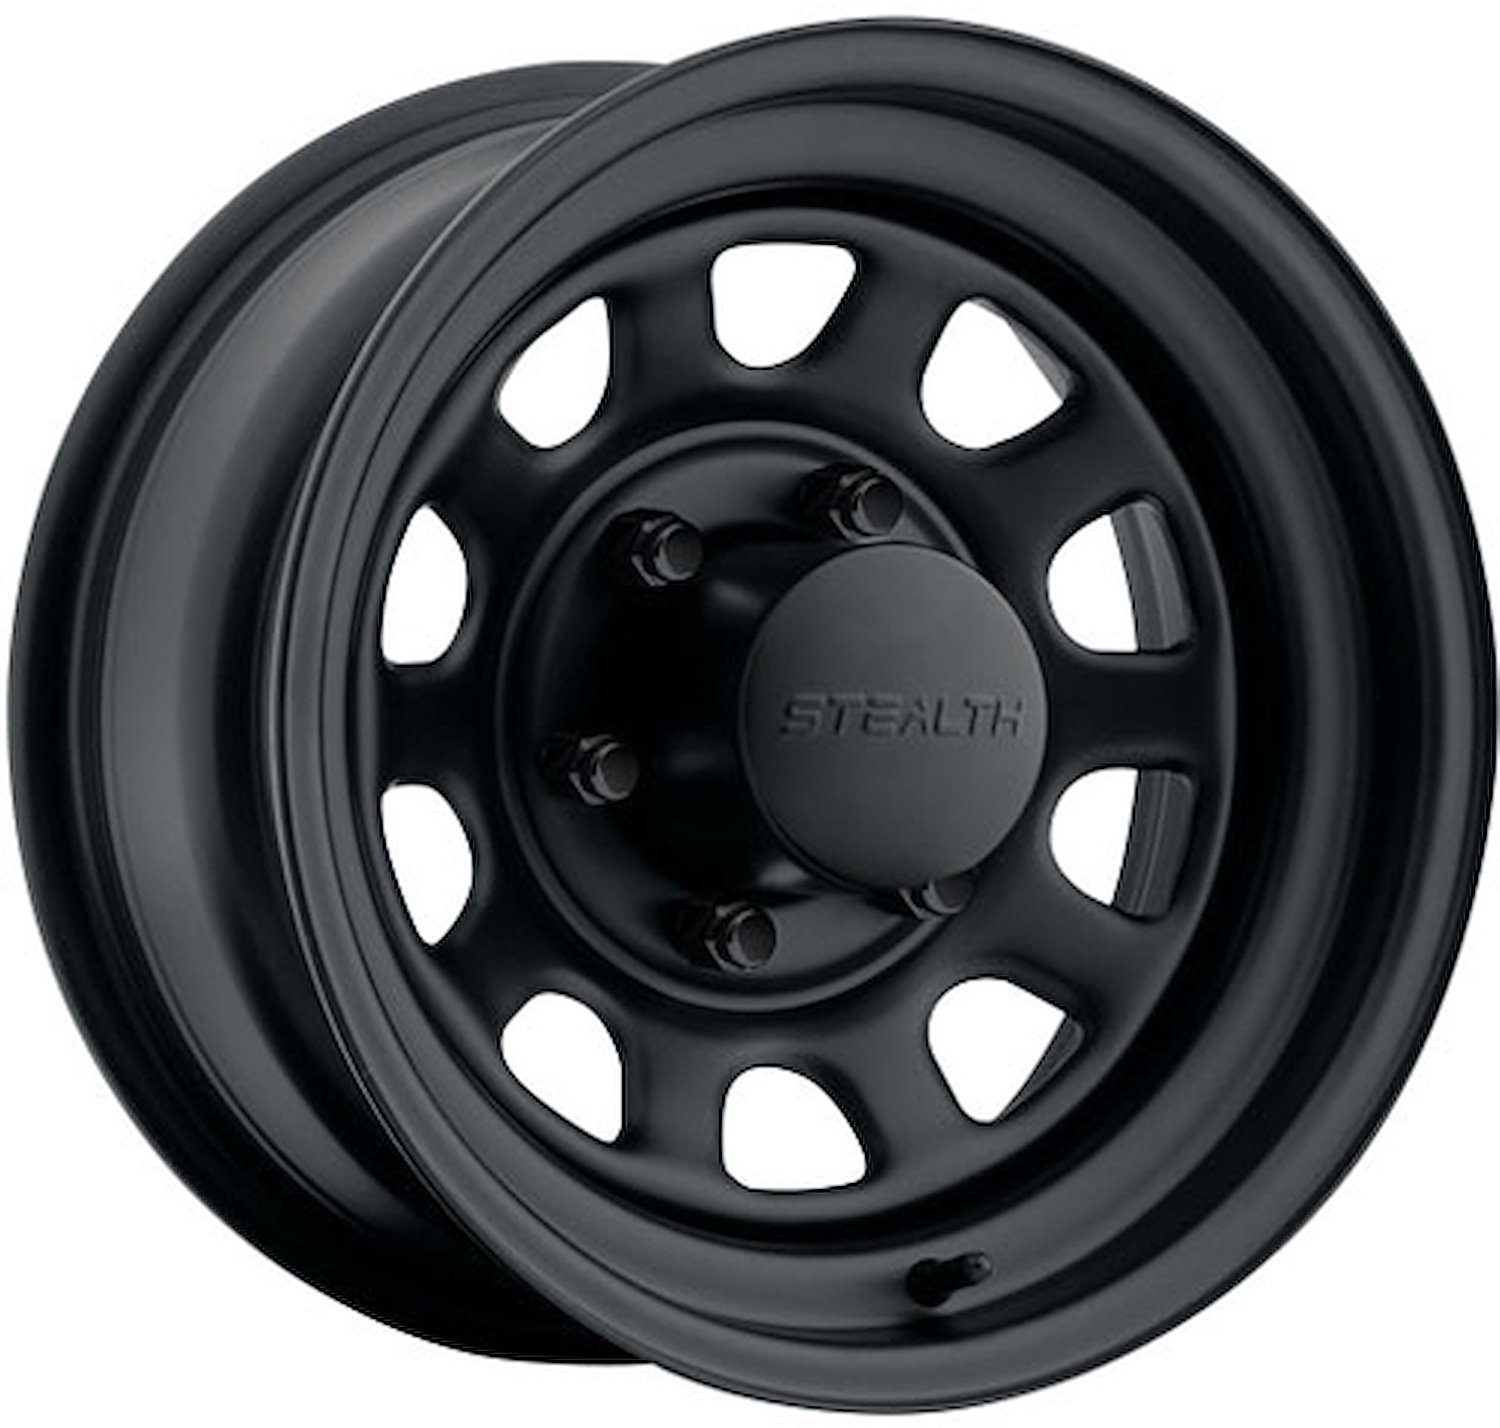 Stealth Black Daytona Wheel (Series 804) Size: 16" x 8"